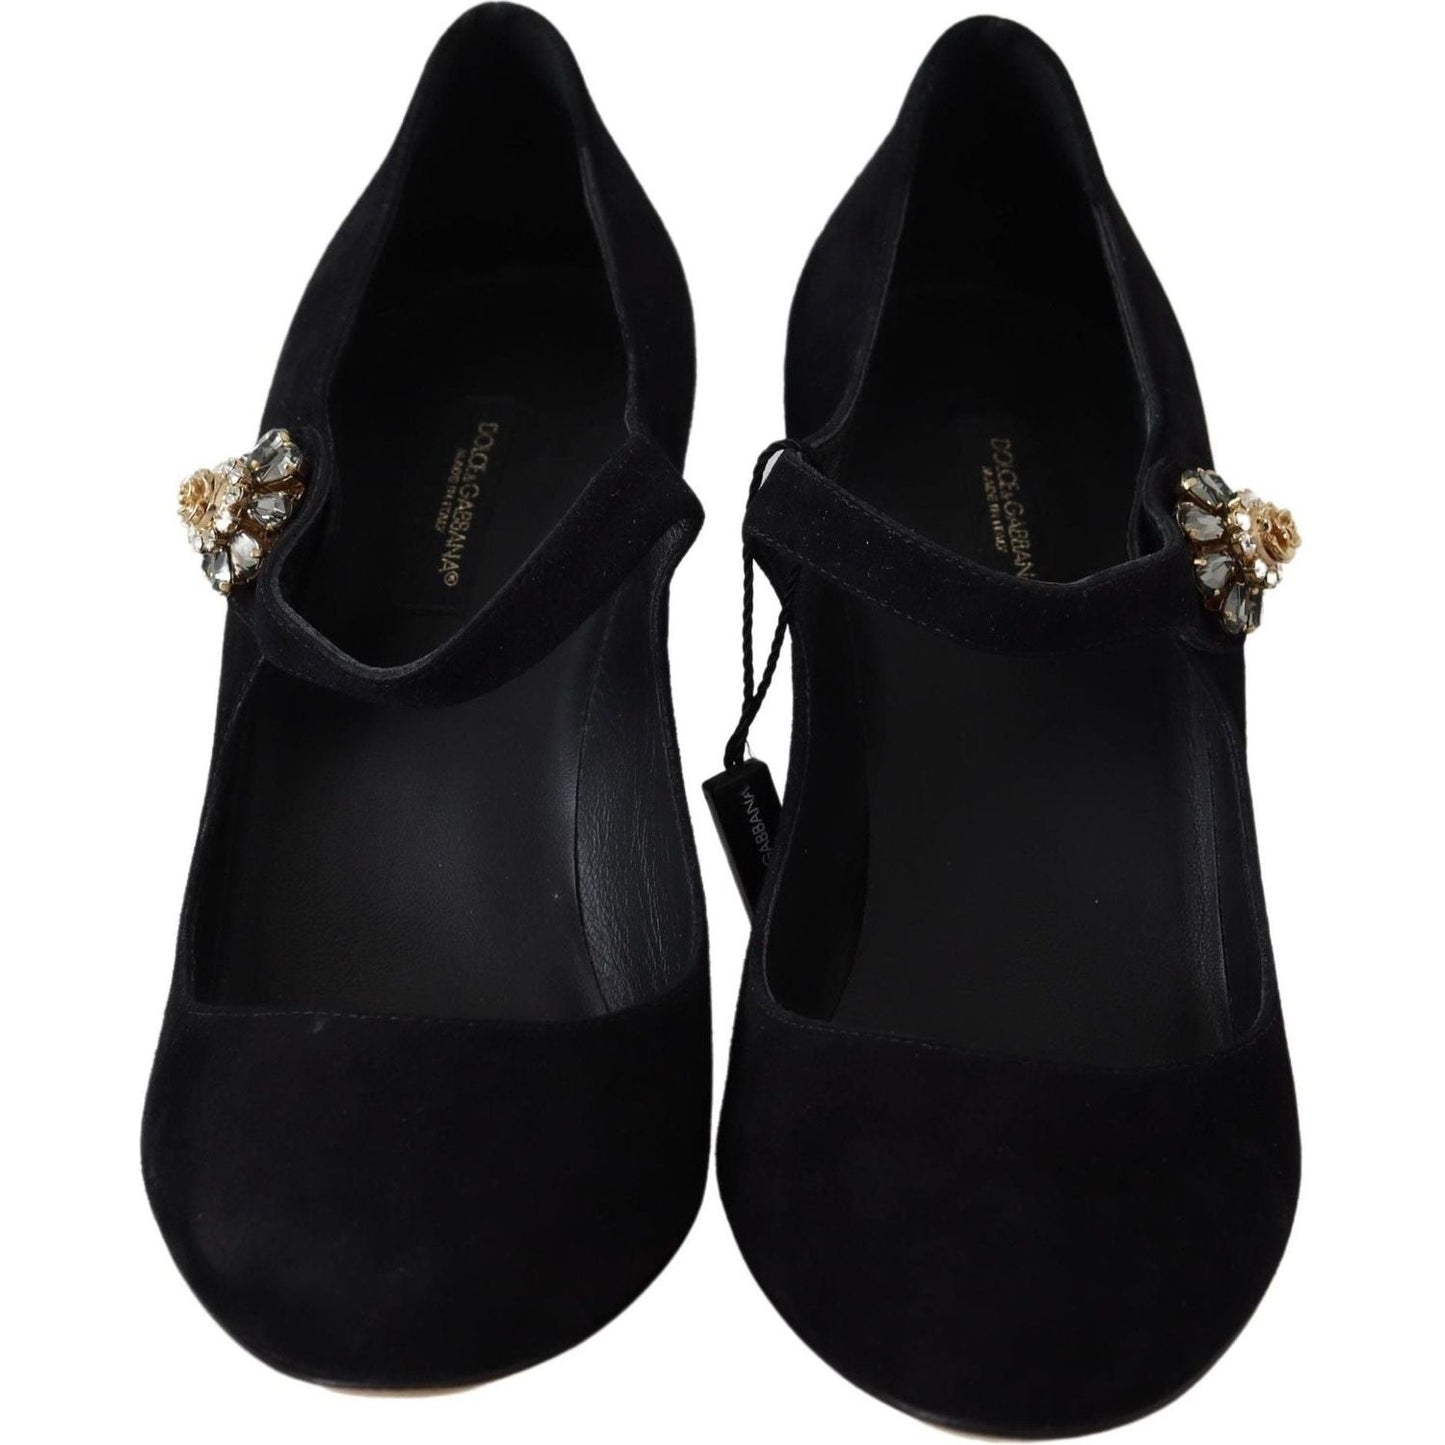 Dolce & Gabbana Elegant Black Suede Mary Janes Pumps black-suede-crystal-heels-mary-jane-shoes